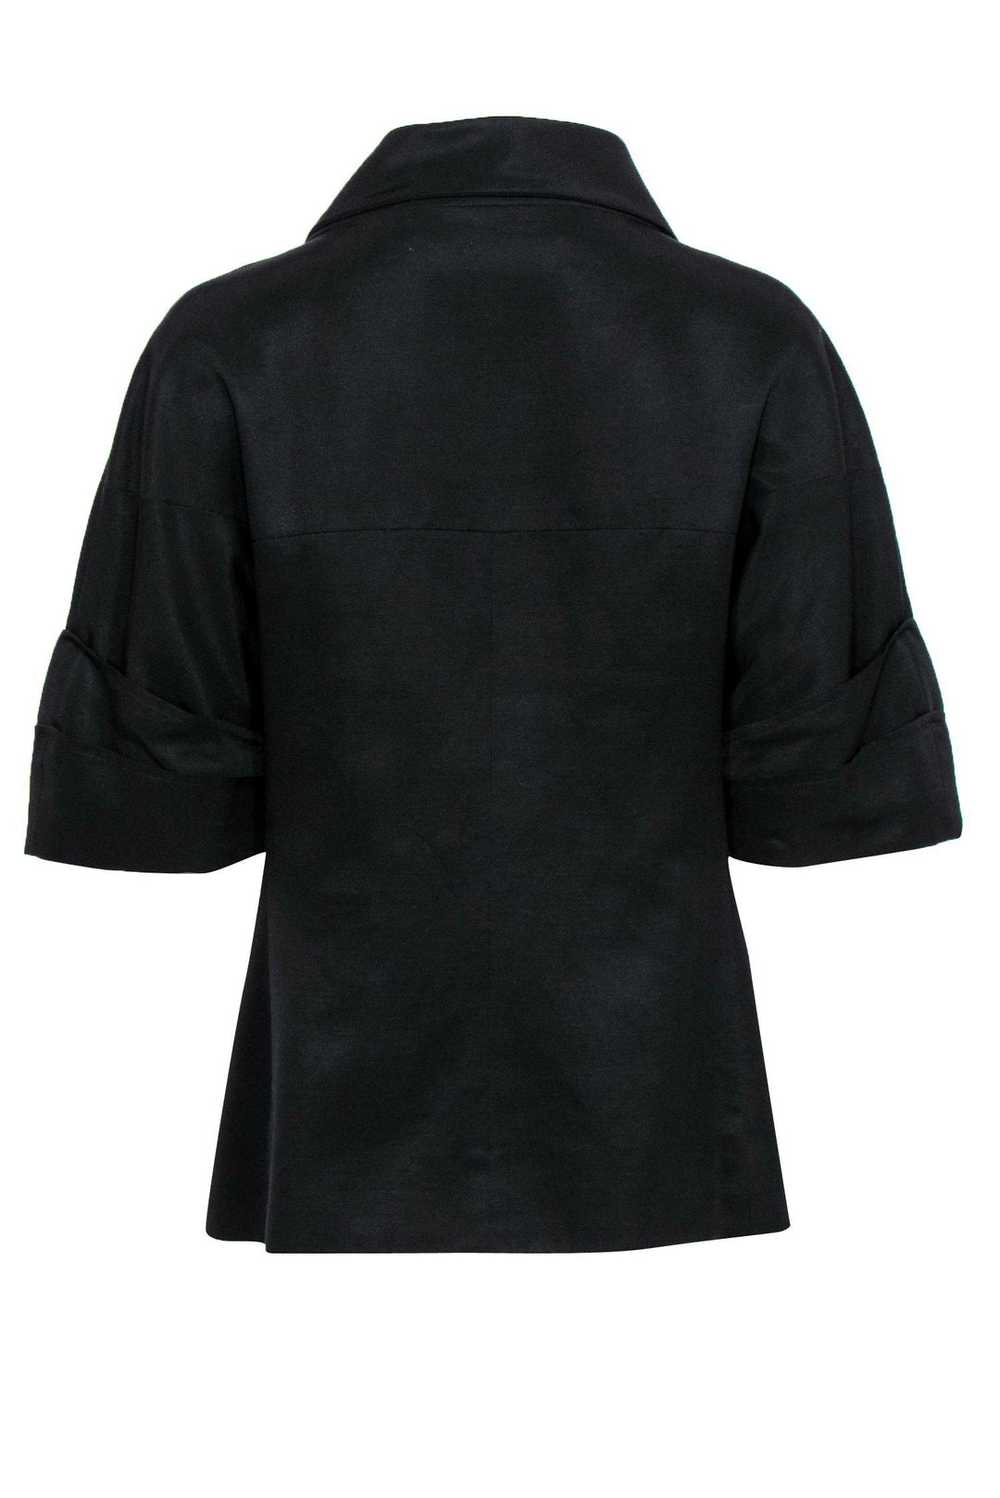 Lela Rose - Black Cowl Neck Snap Button Jacket Sz… - image 3